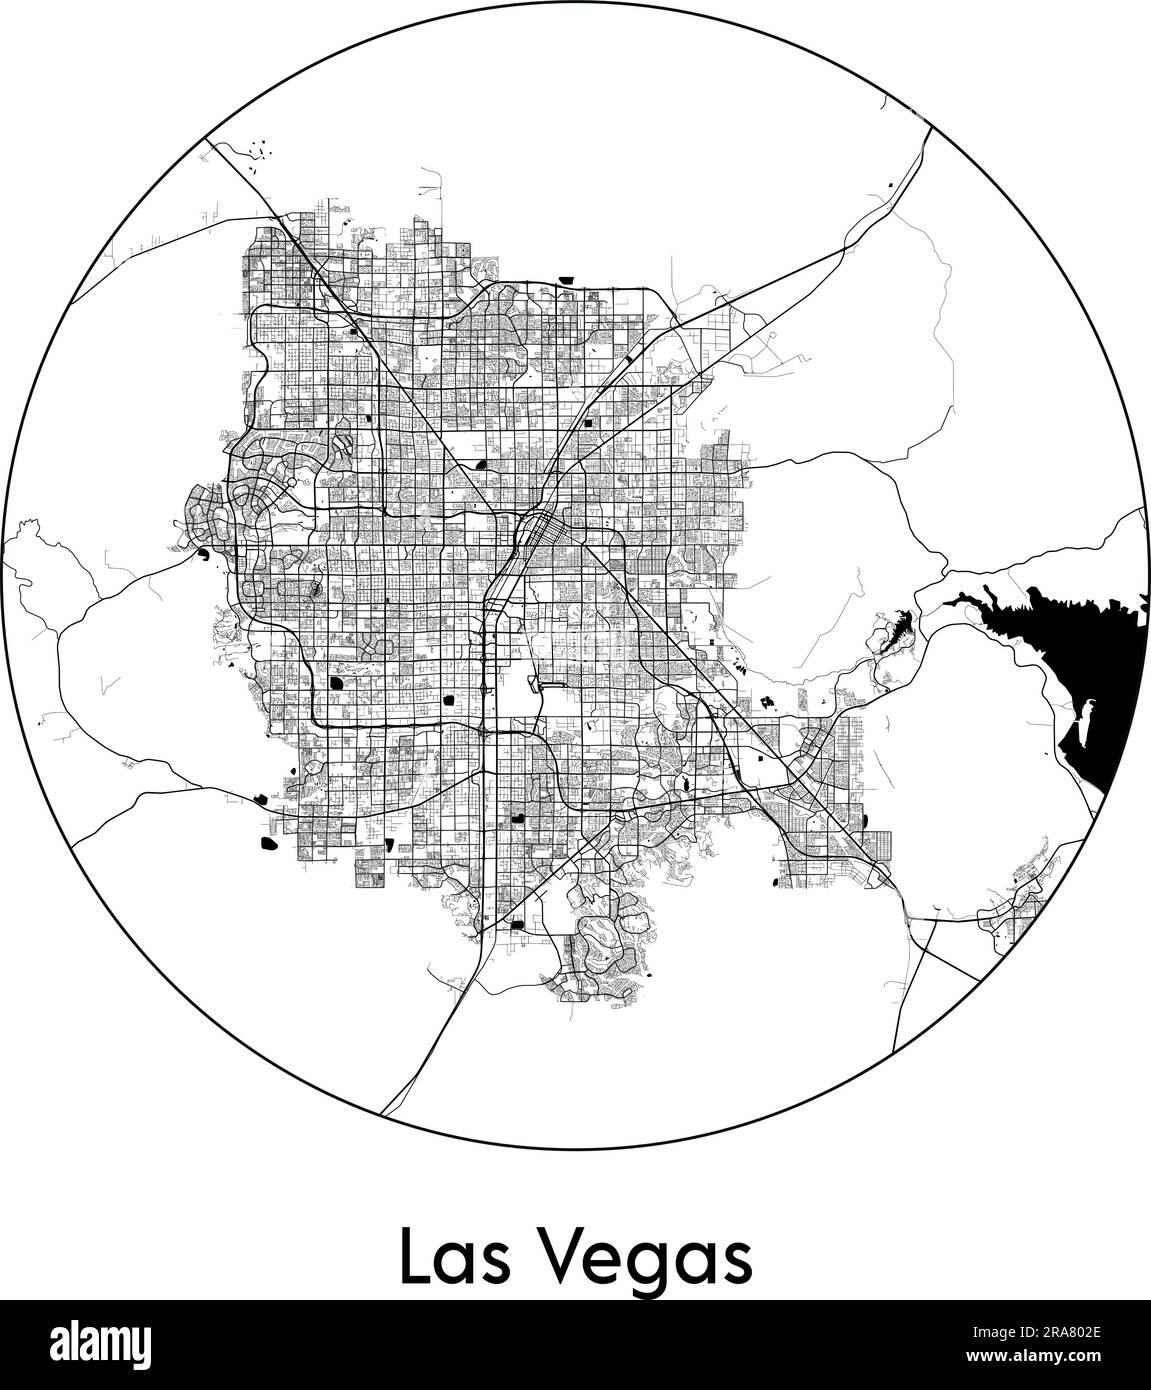 Stadtplan Las Vegas USA Nordamerika Vektordarstellung schwarz weiß Stock Vektor